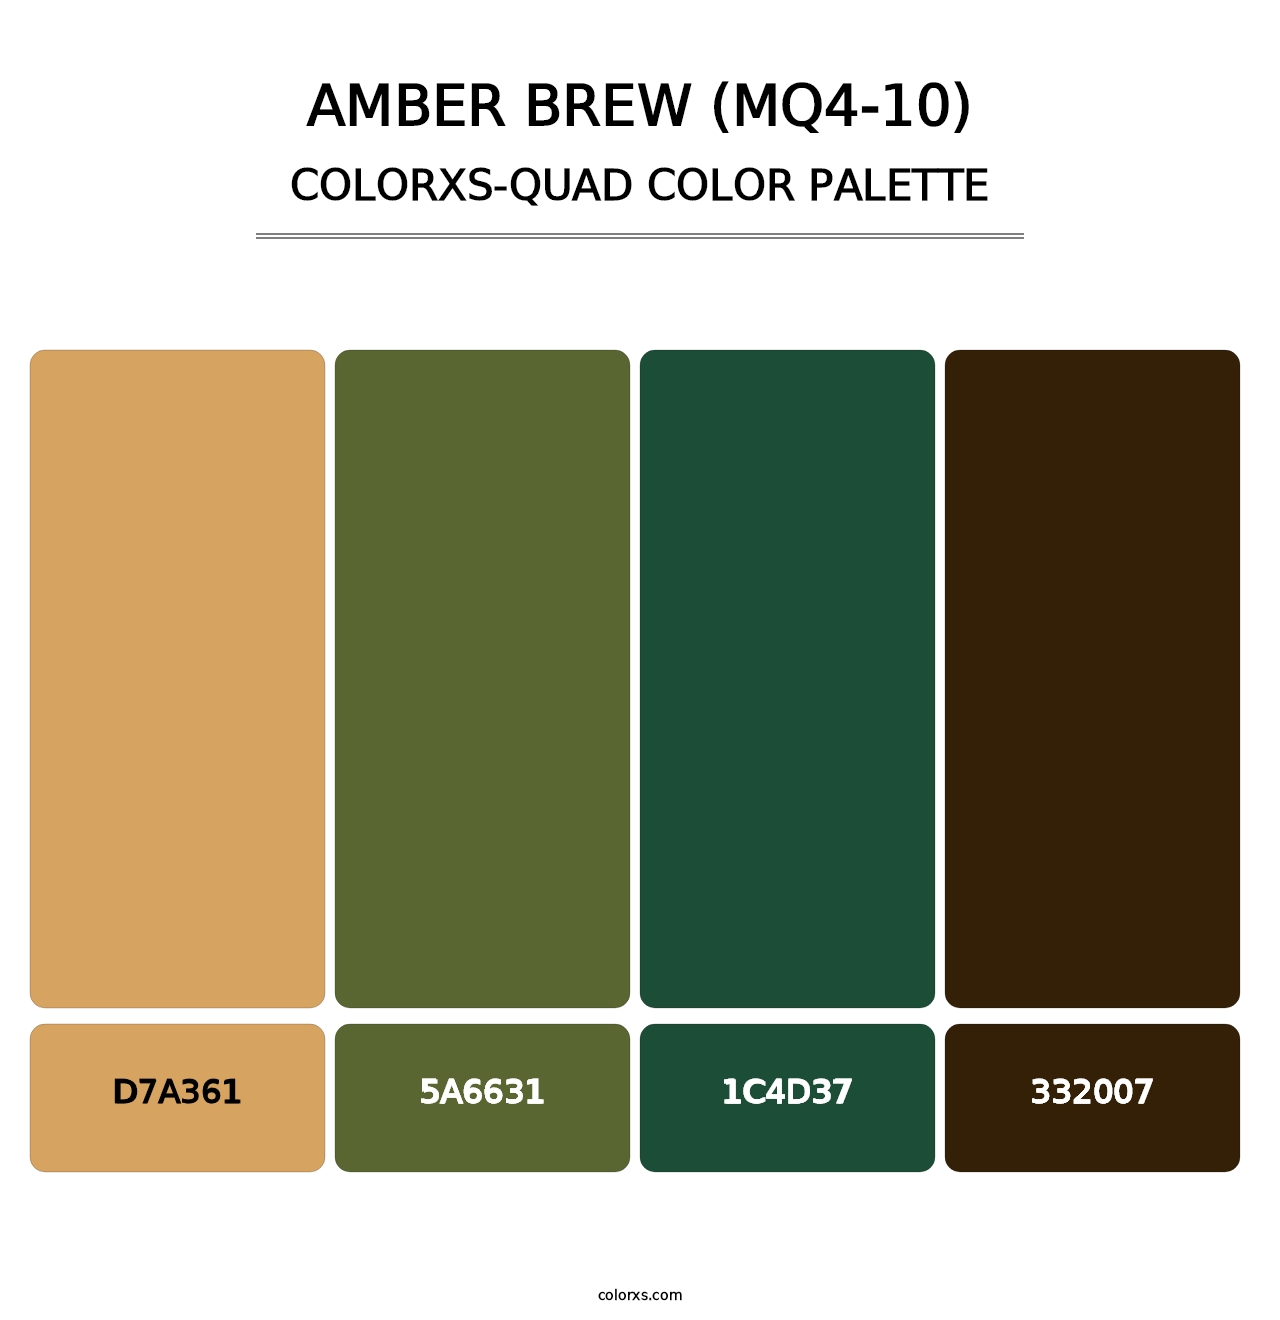 Amber Brew (MQ4-10) - Colorxs Quad Palette